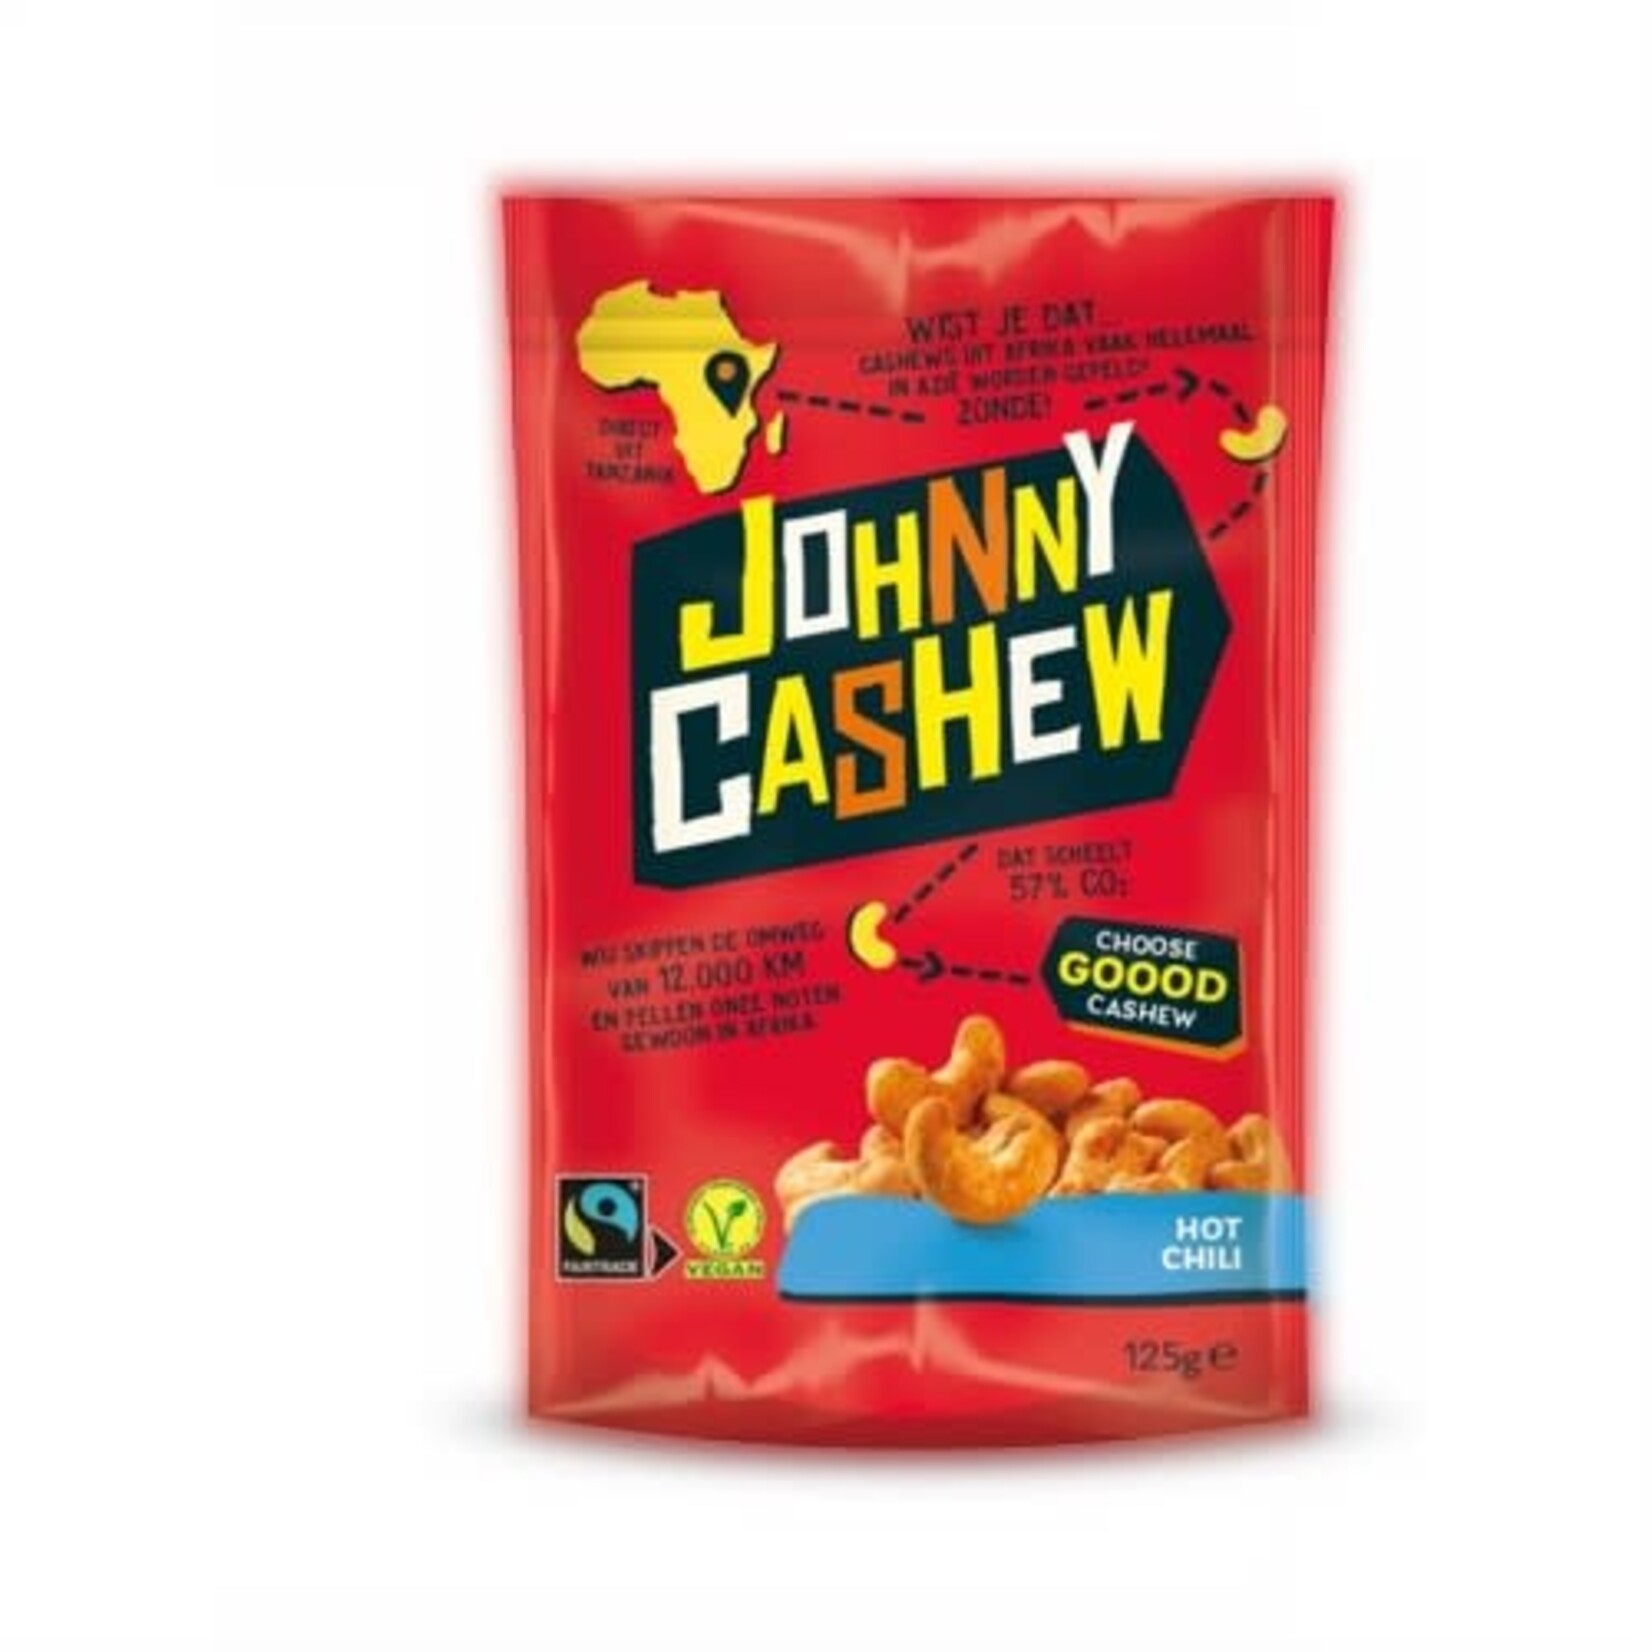 Johnny cashew Johnny Cashew Hot Chili 125gr